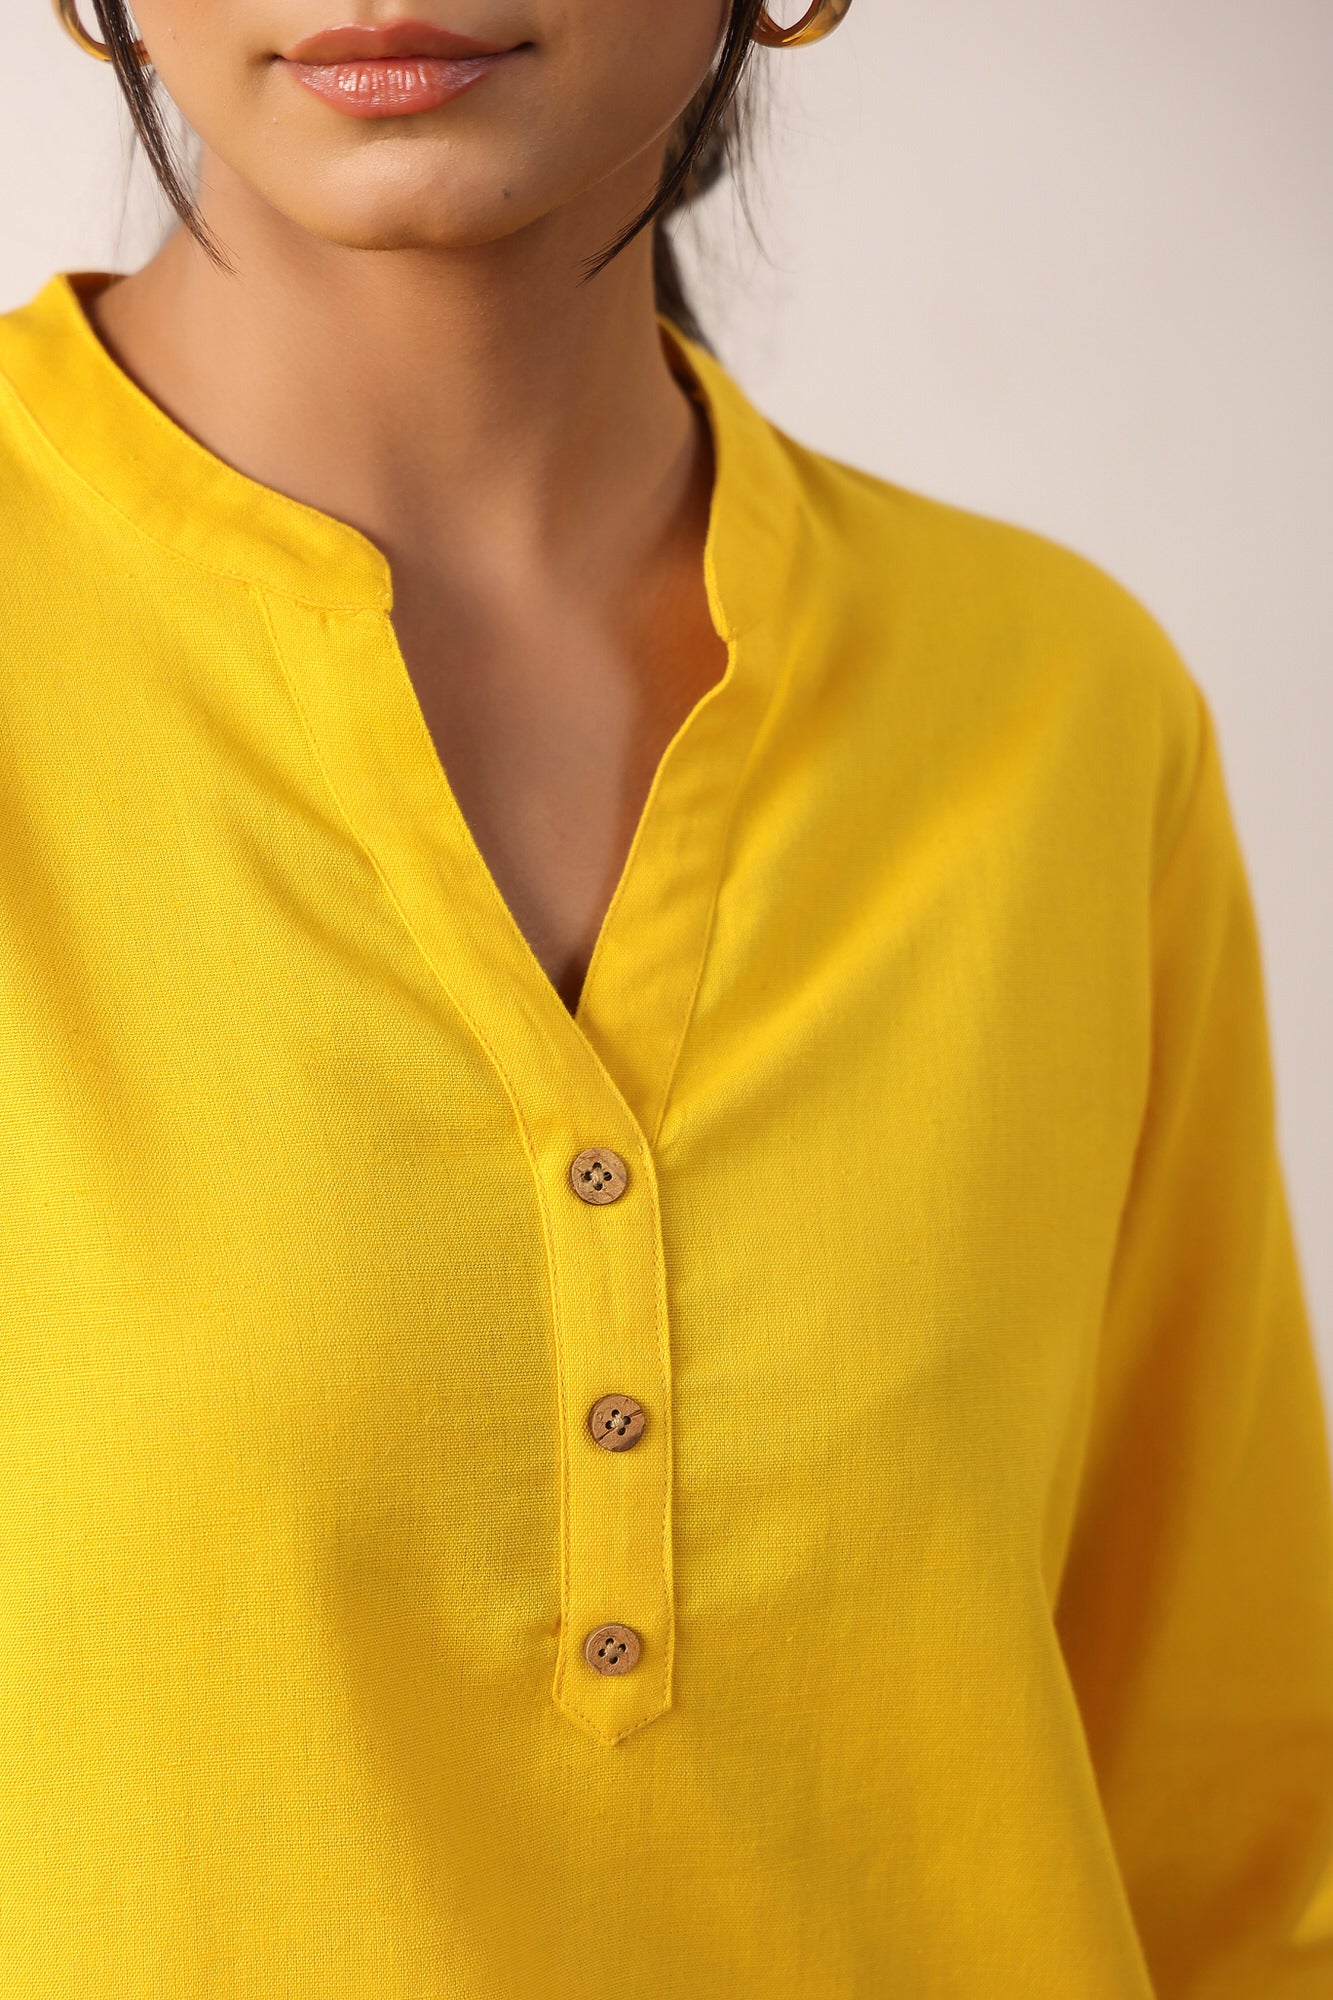 Yellow Ochre Cotton Top